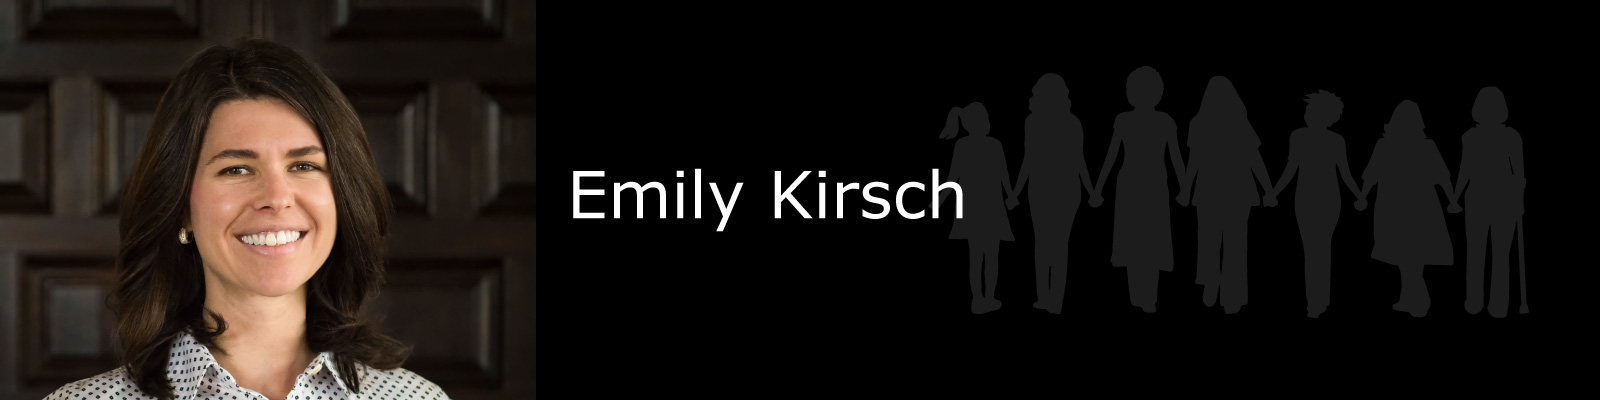 Photo of Emily Kirsch.